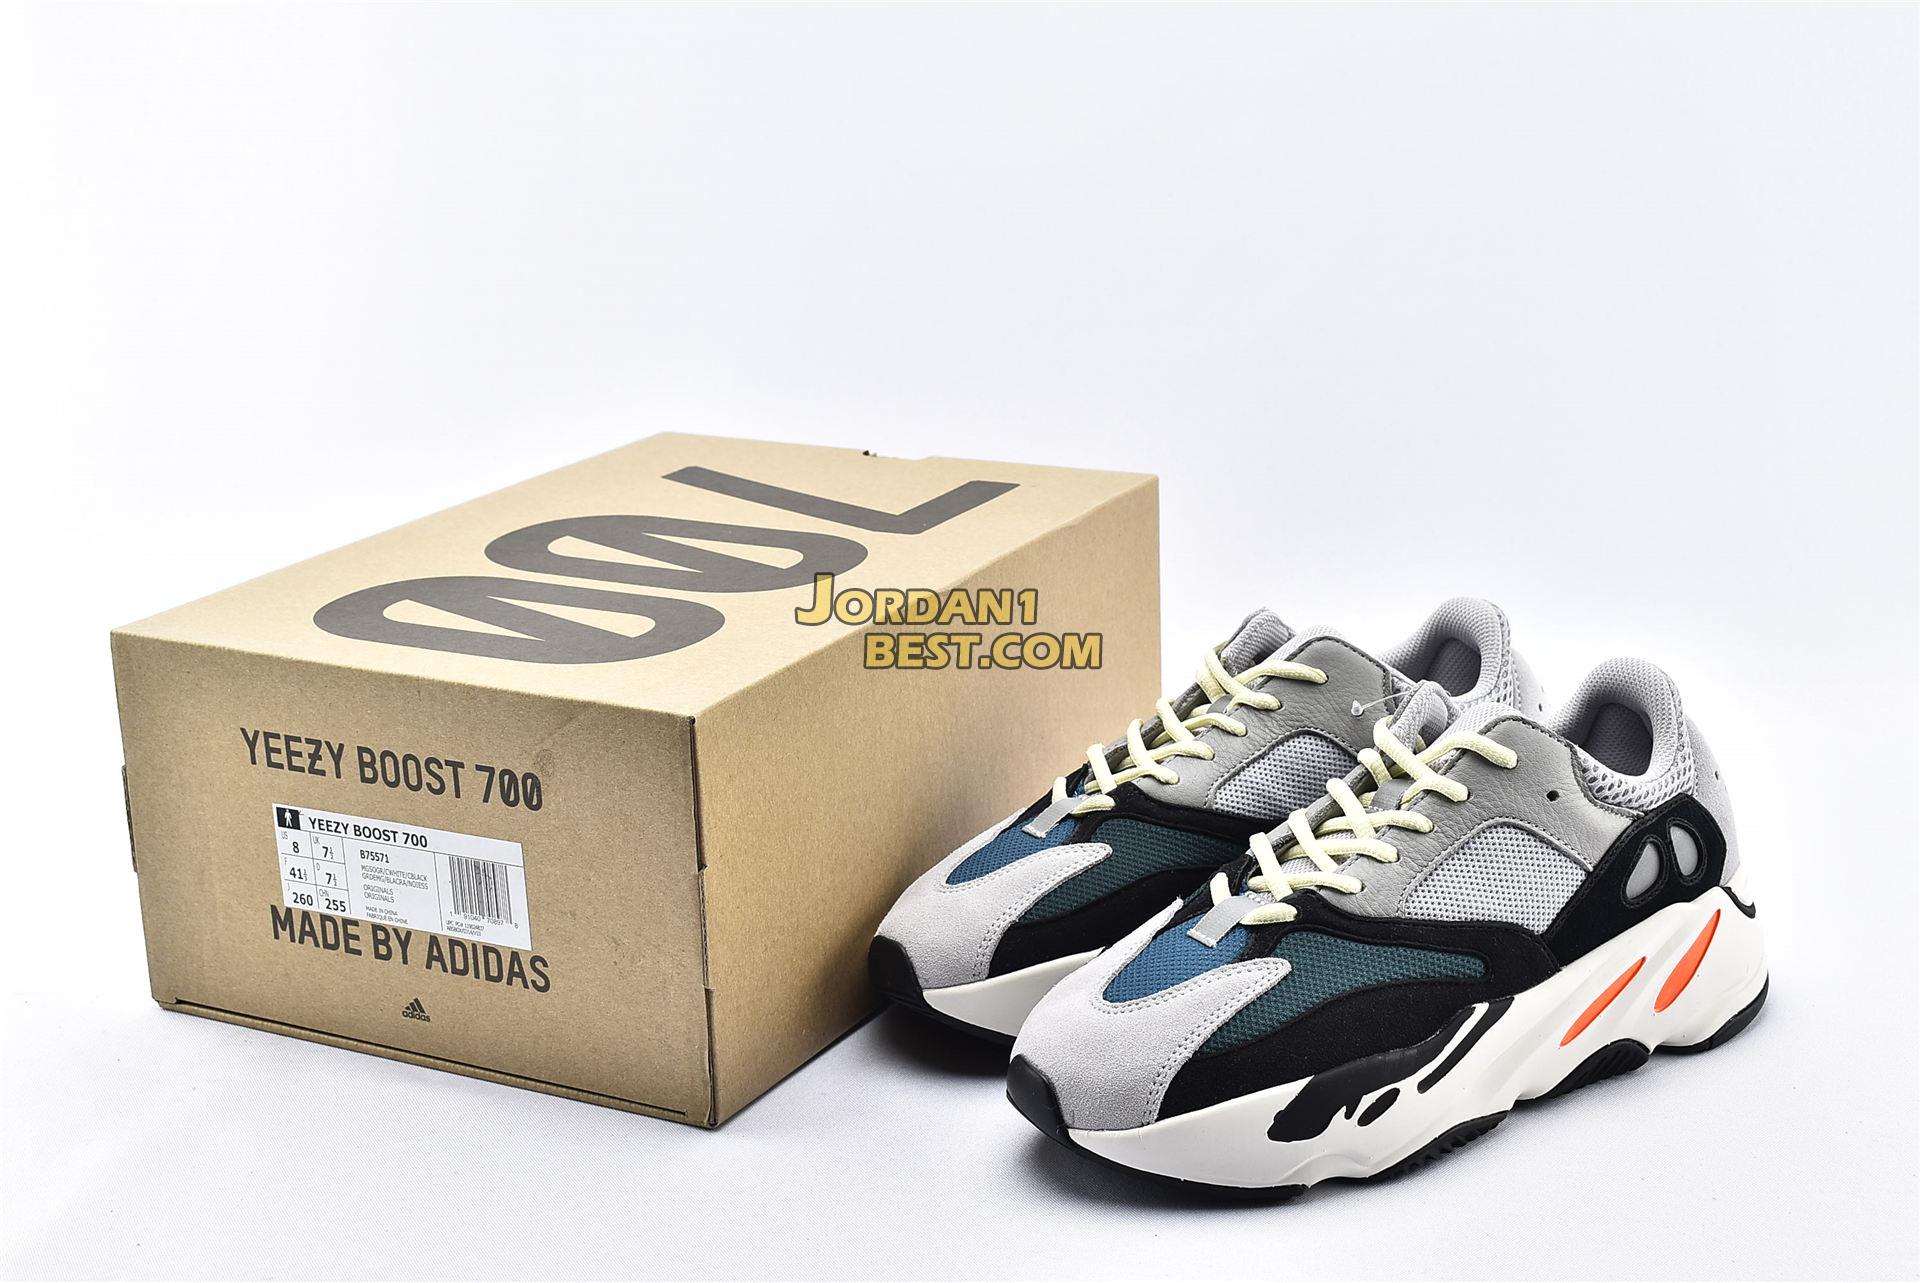 Adidas Yeezy Boost 700 "Wave Runner" B75571